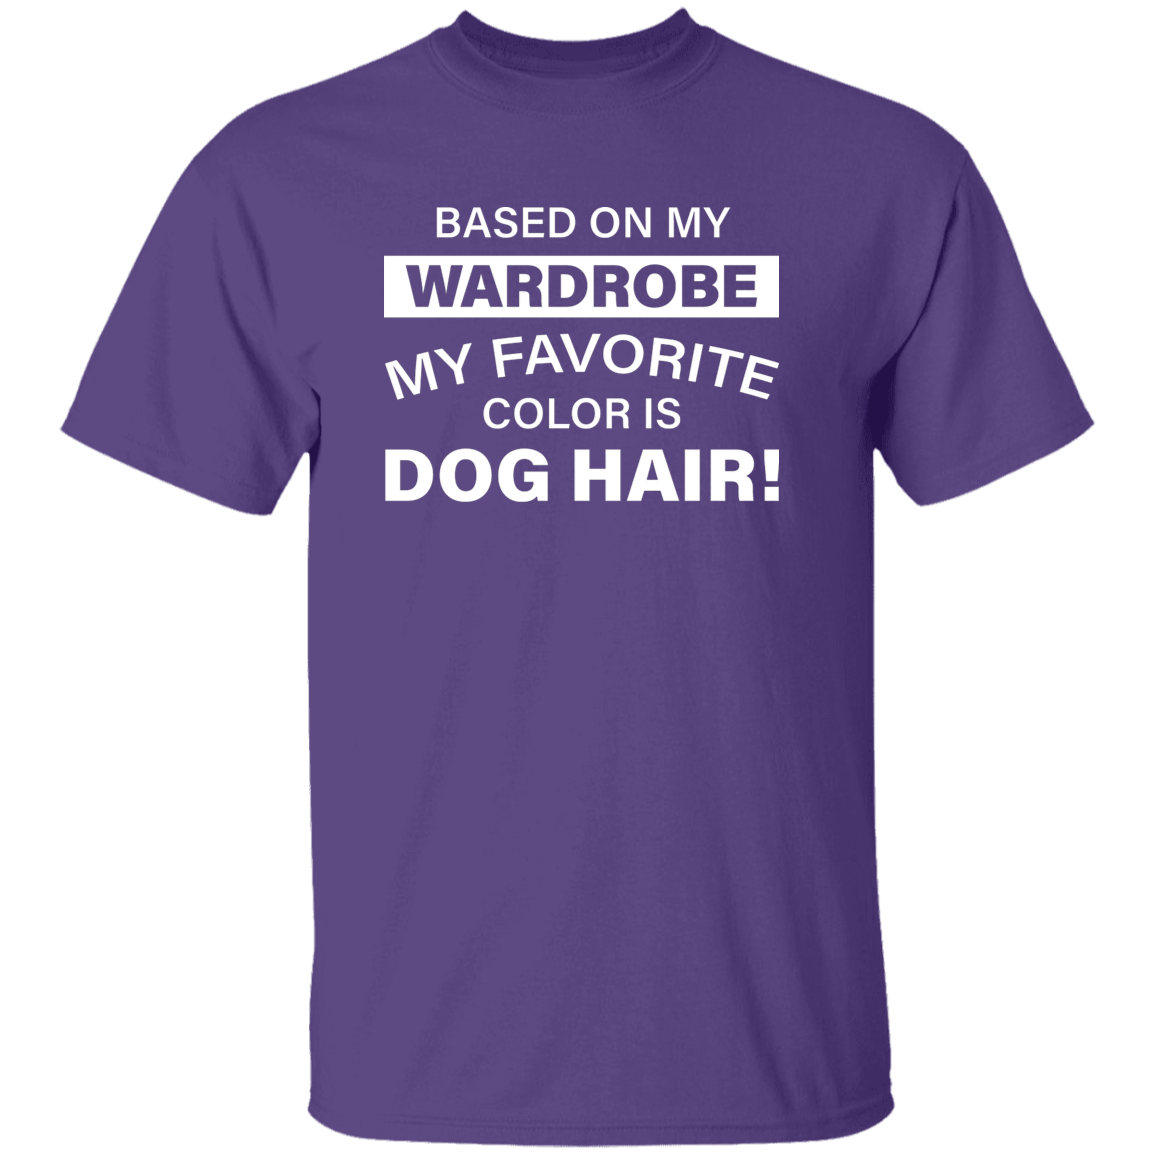 Favorite Color Dog Hair - T Shirt.